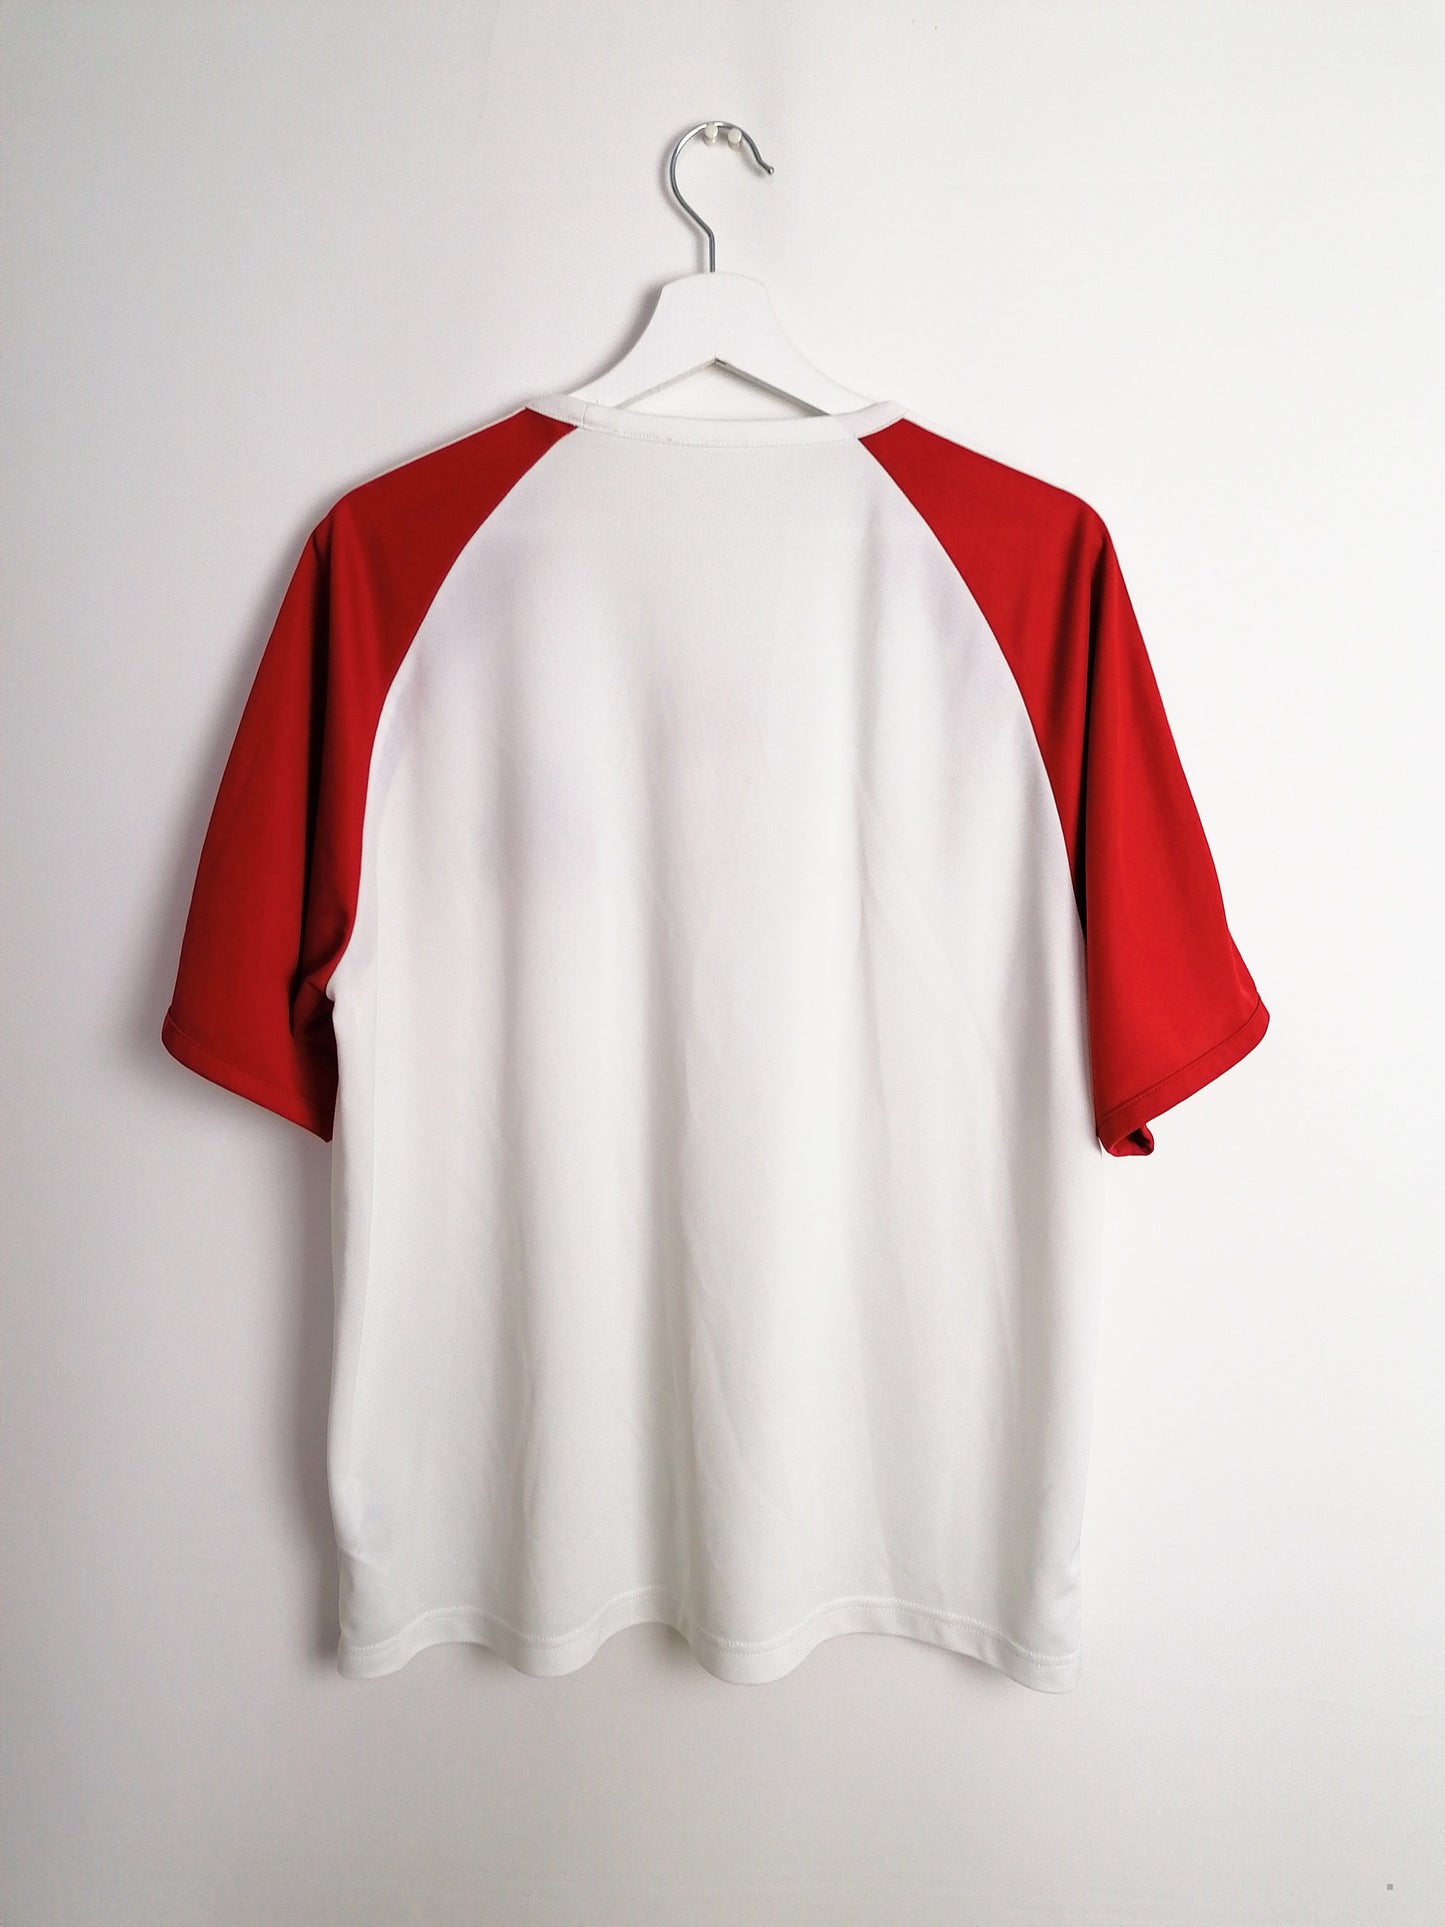 ADIDAS Unisex Football T-shirt Koln Team - size L